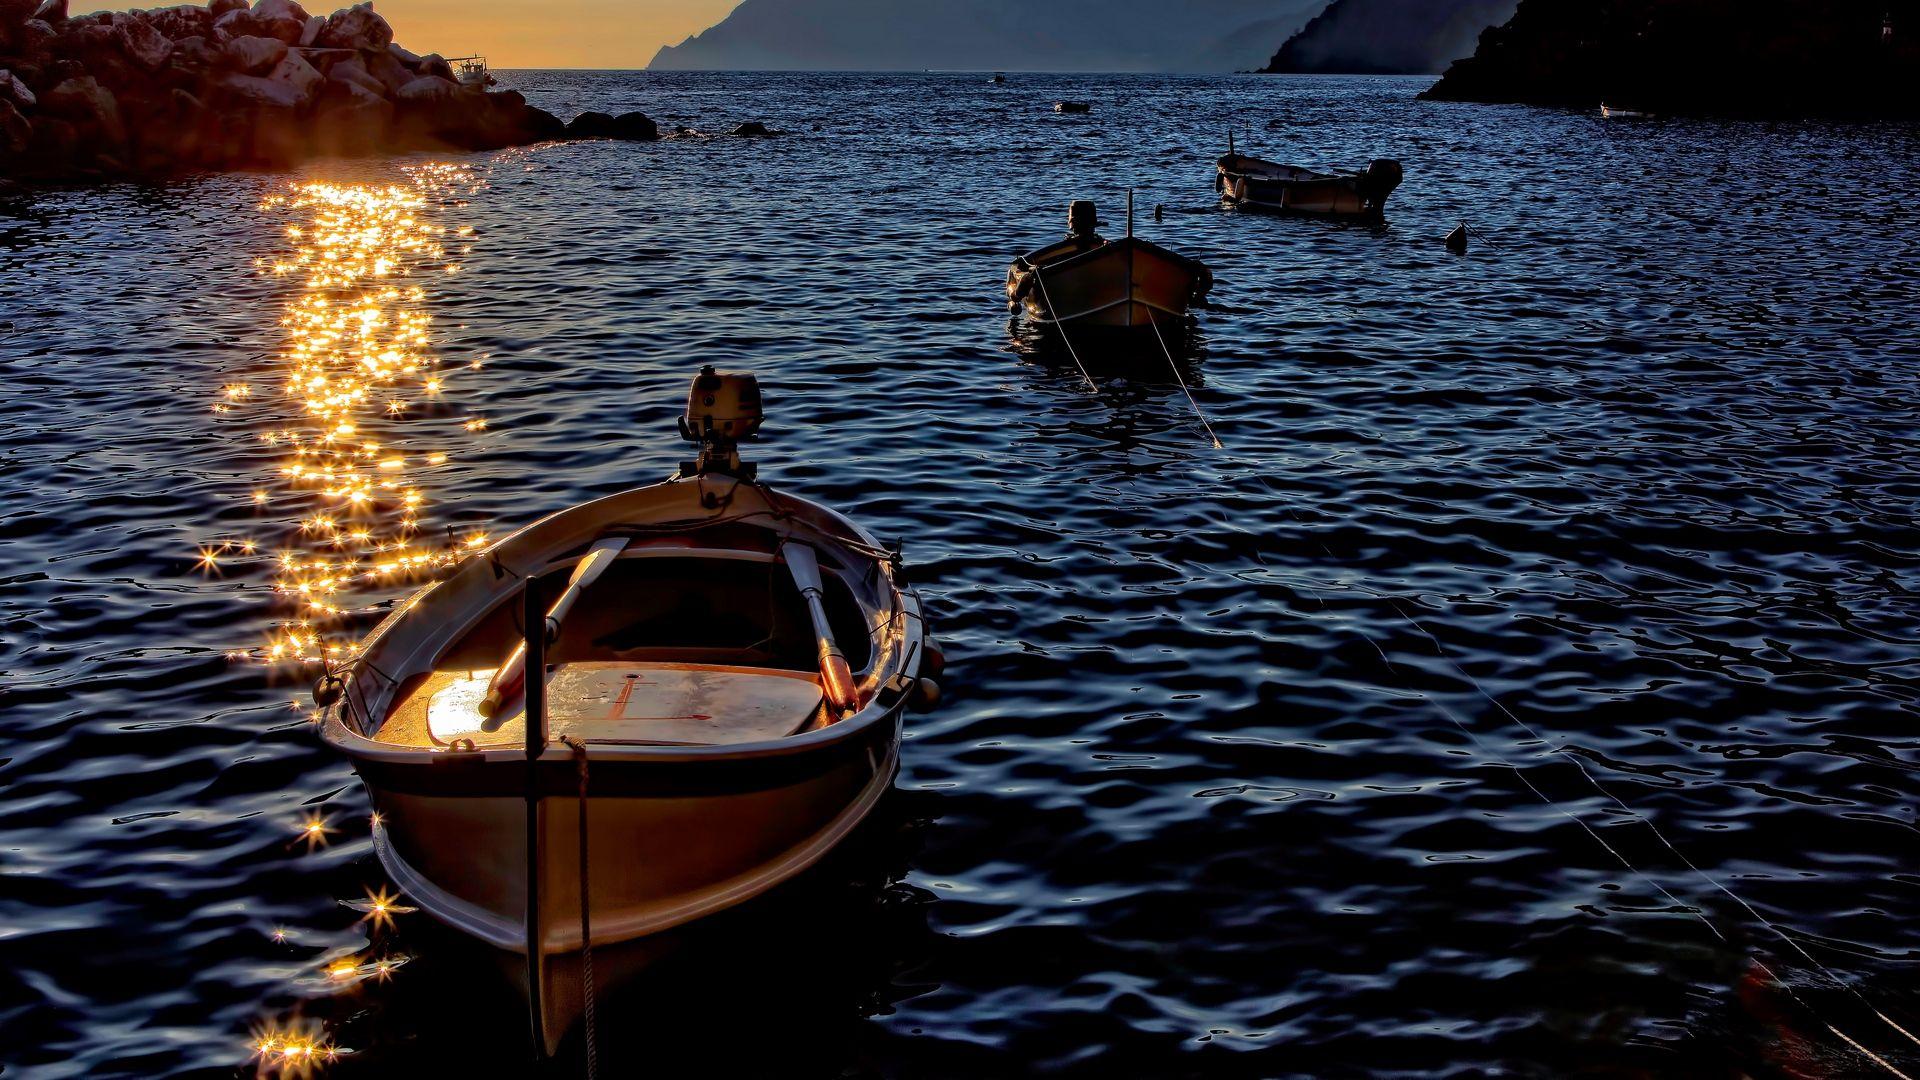 Download wallpaper 1920x1080 boat, sea, sunset, water, shine full HD